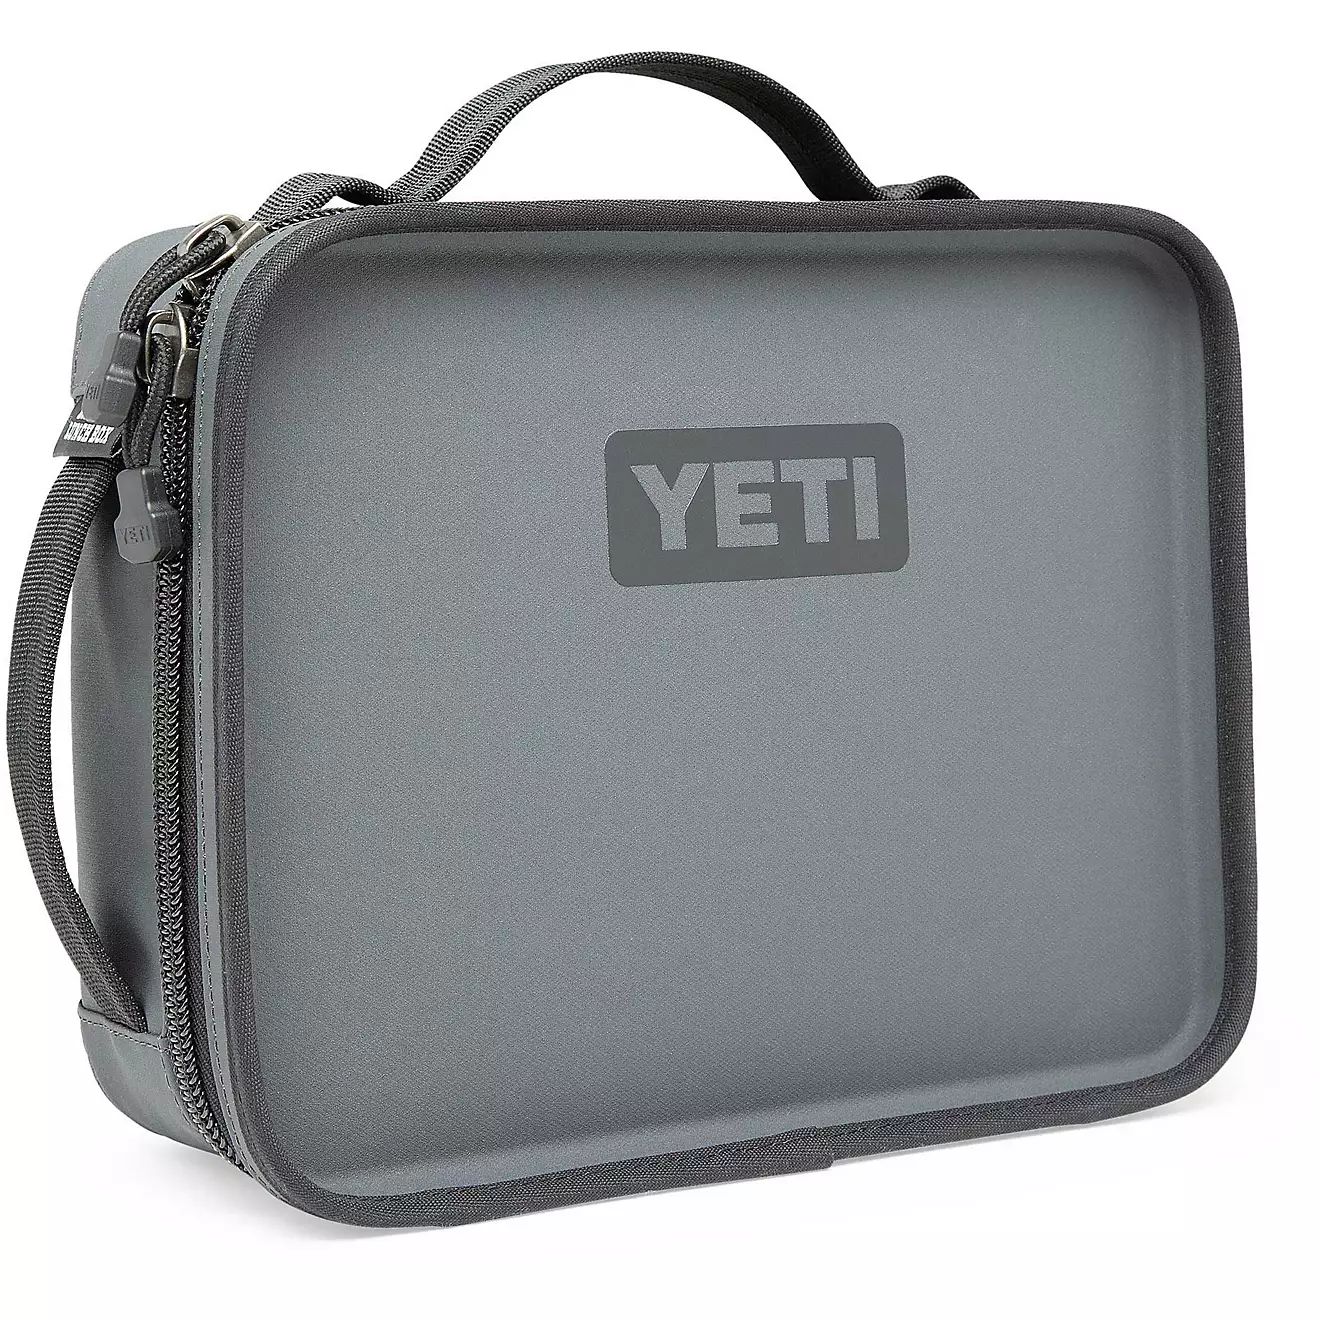 YETI Daytrip Lunch Box | Academy | Academy Sports + Outdoors